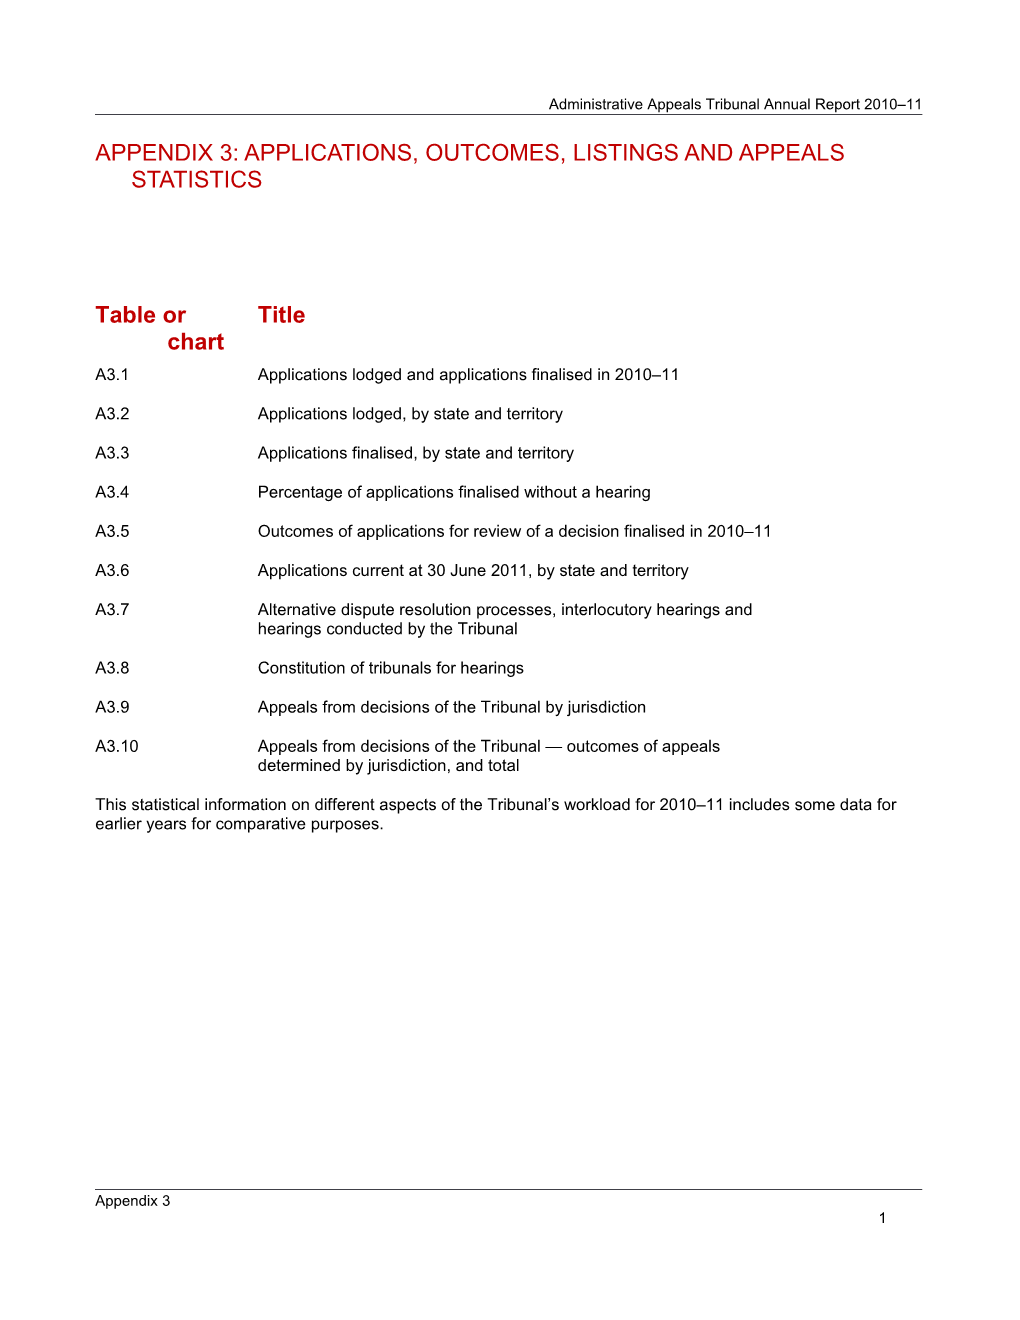 AAT Annual Report 2010-11 Appendix 3 Word Version